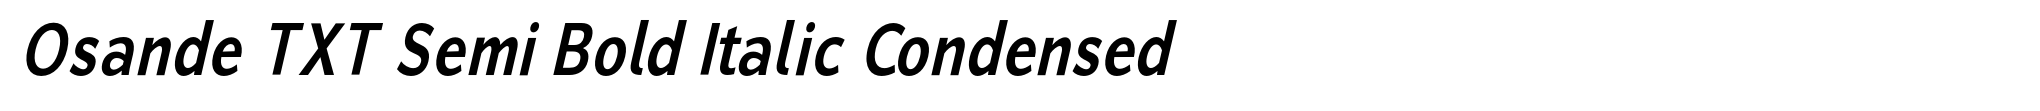 Osande TXT Semi Bold Italic Condensed image